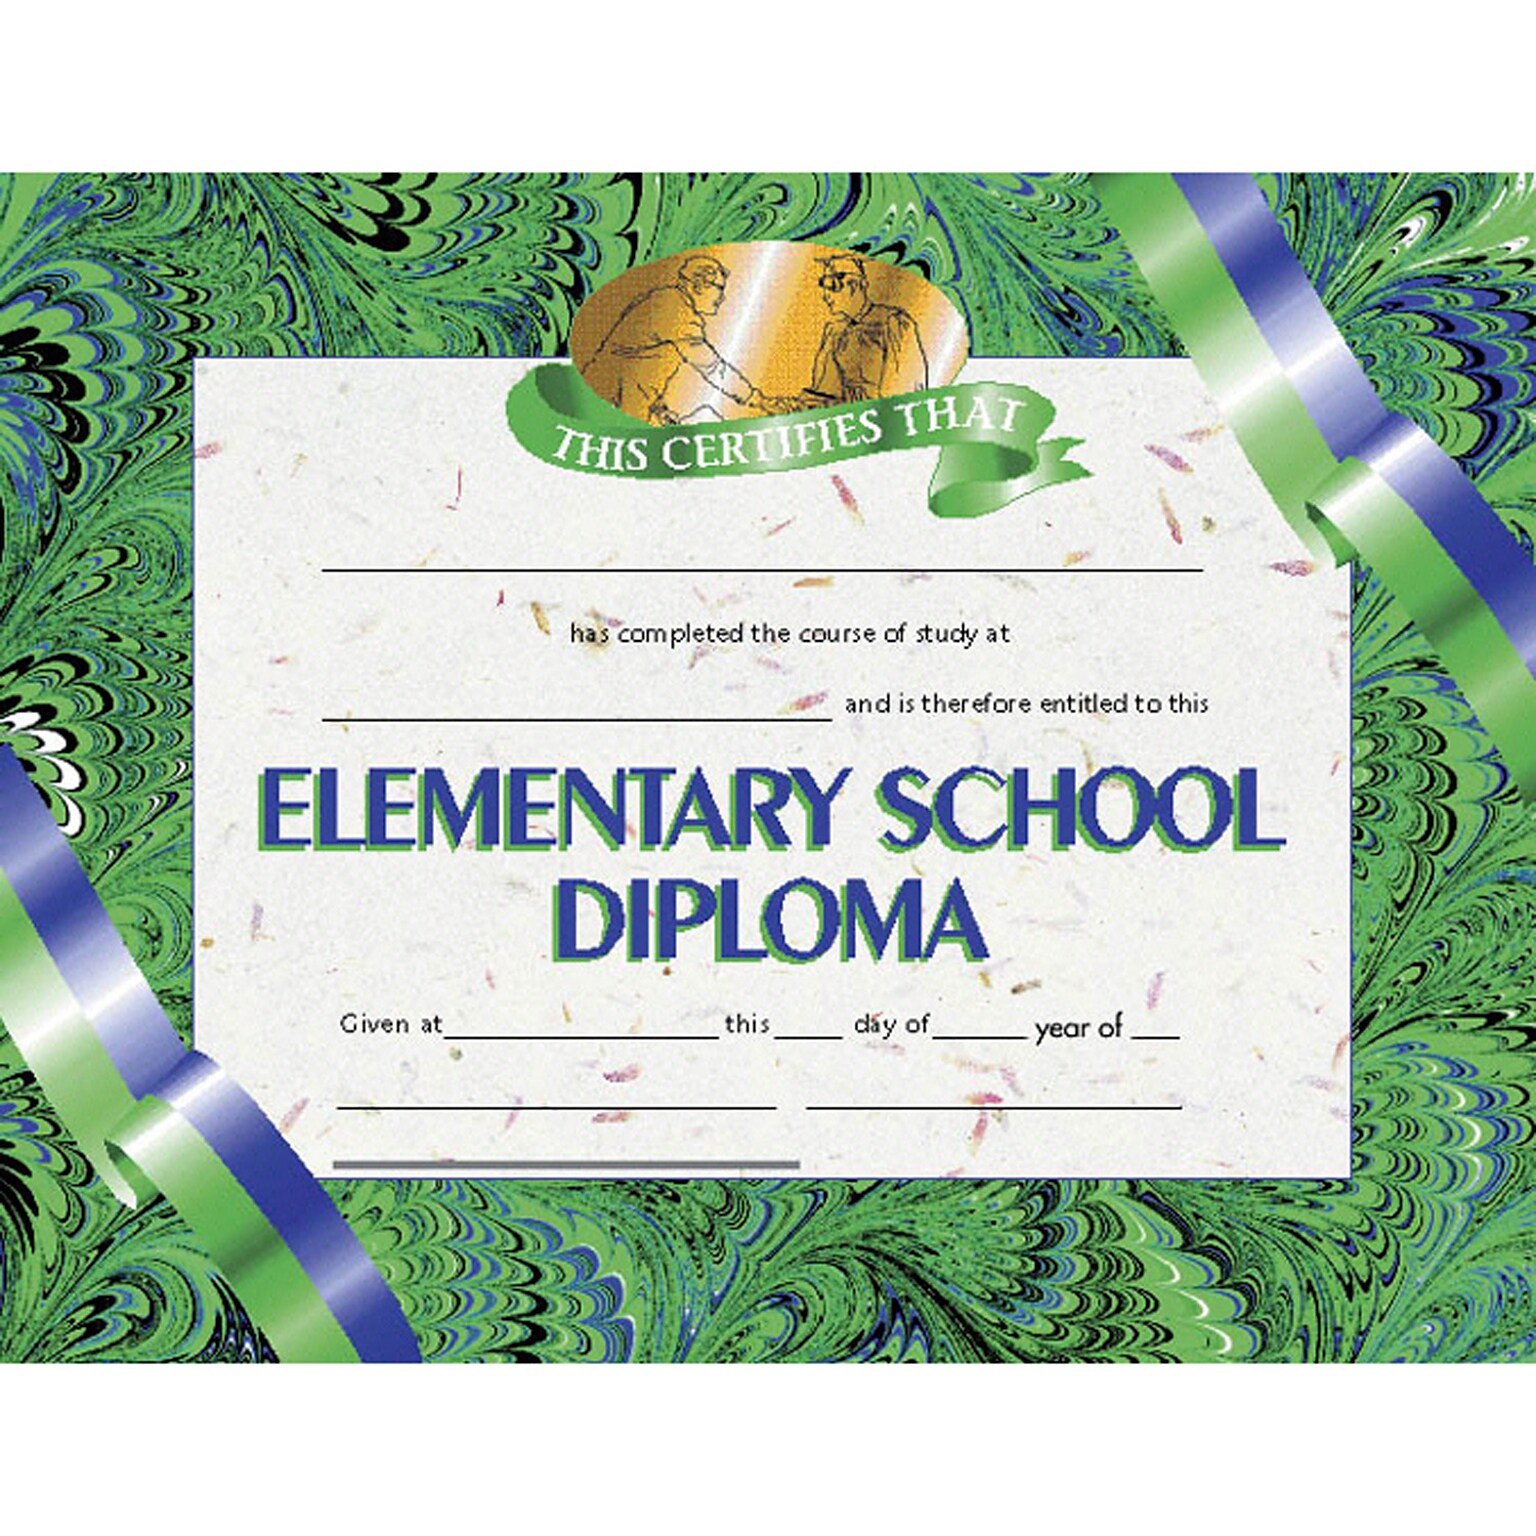 Hayes Elementary School Diploma Certificates, 8.5L x 11W, 30 Certificates/Pack, 4 Packs/Bundle (H-VA522)